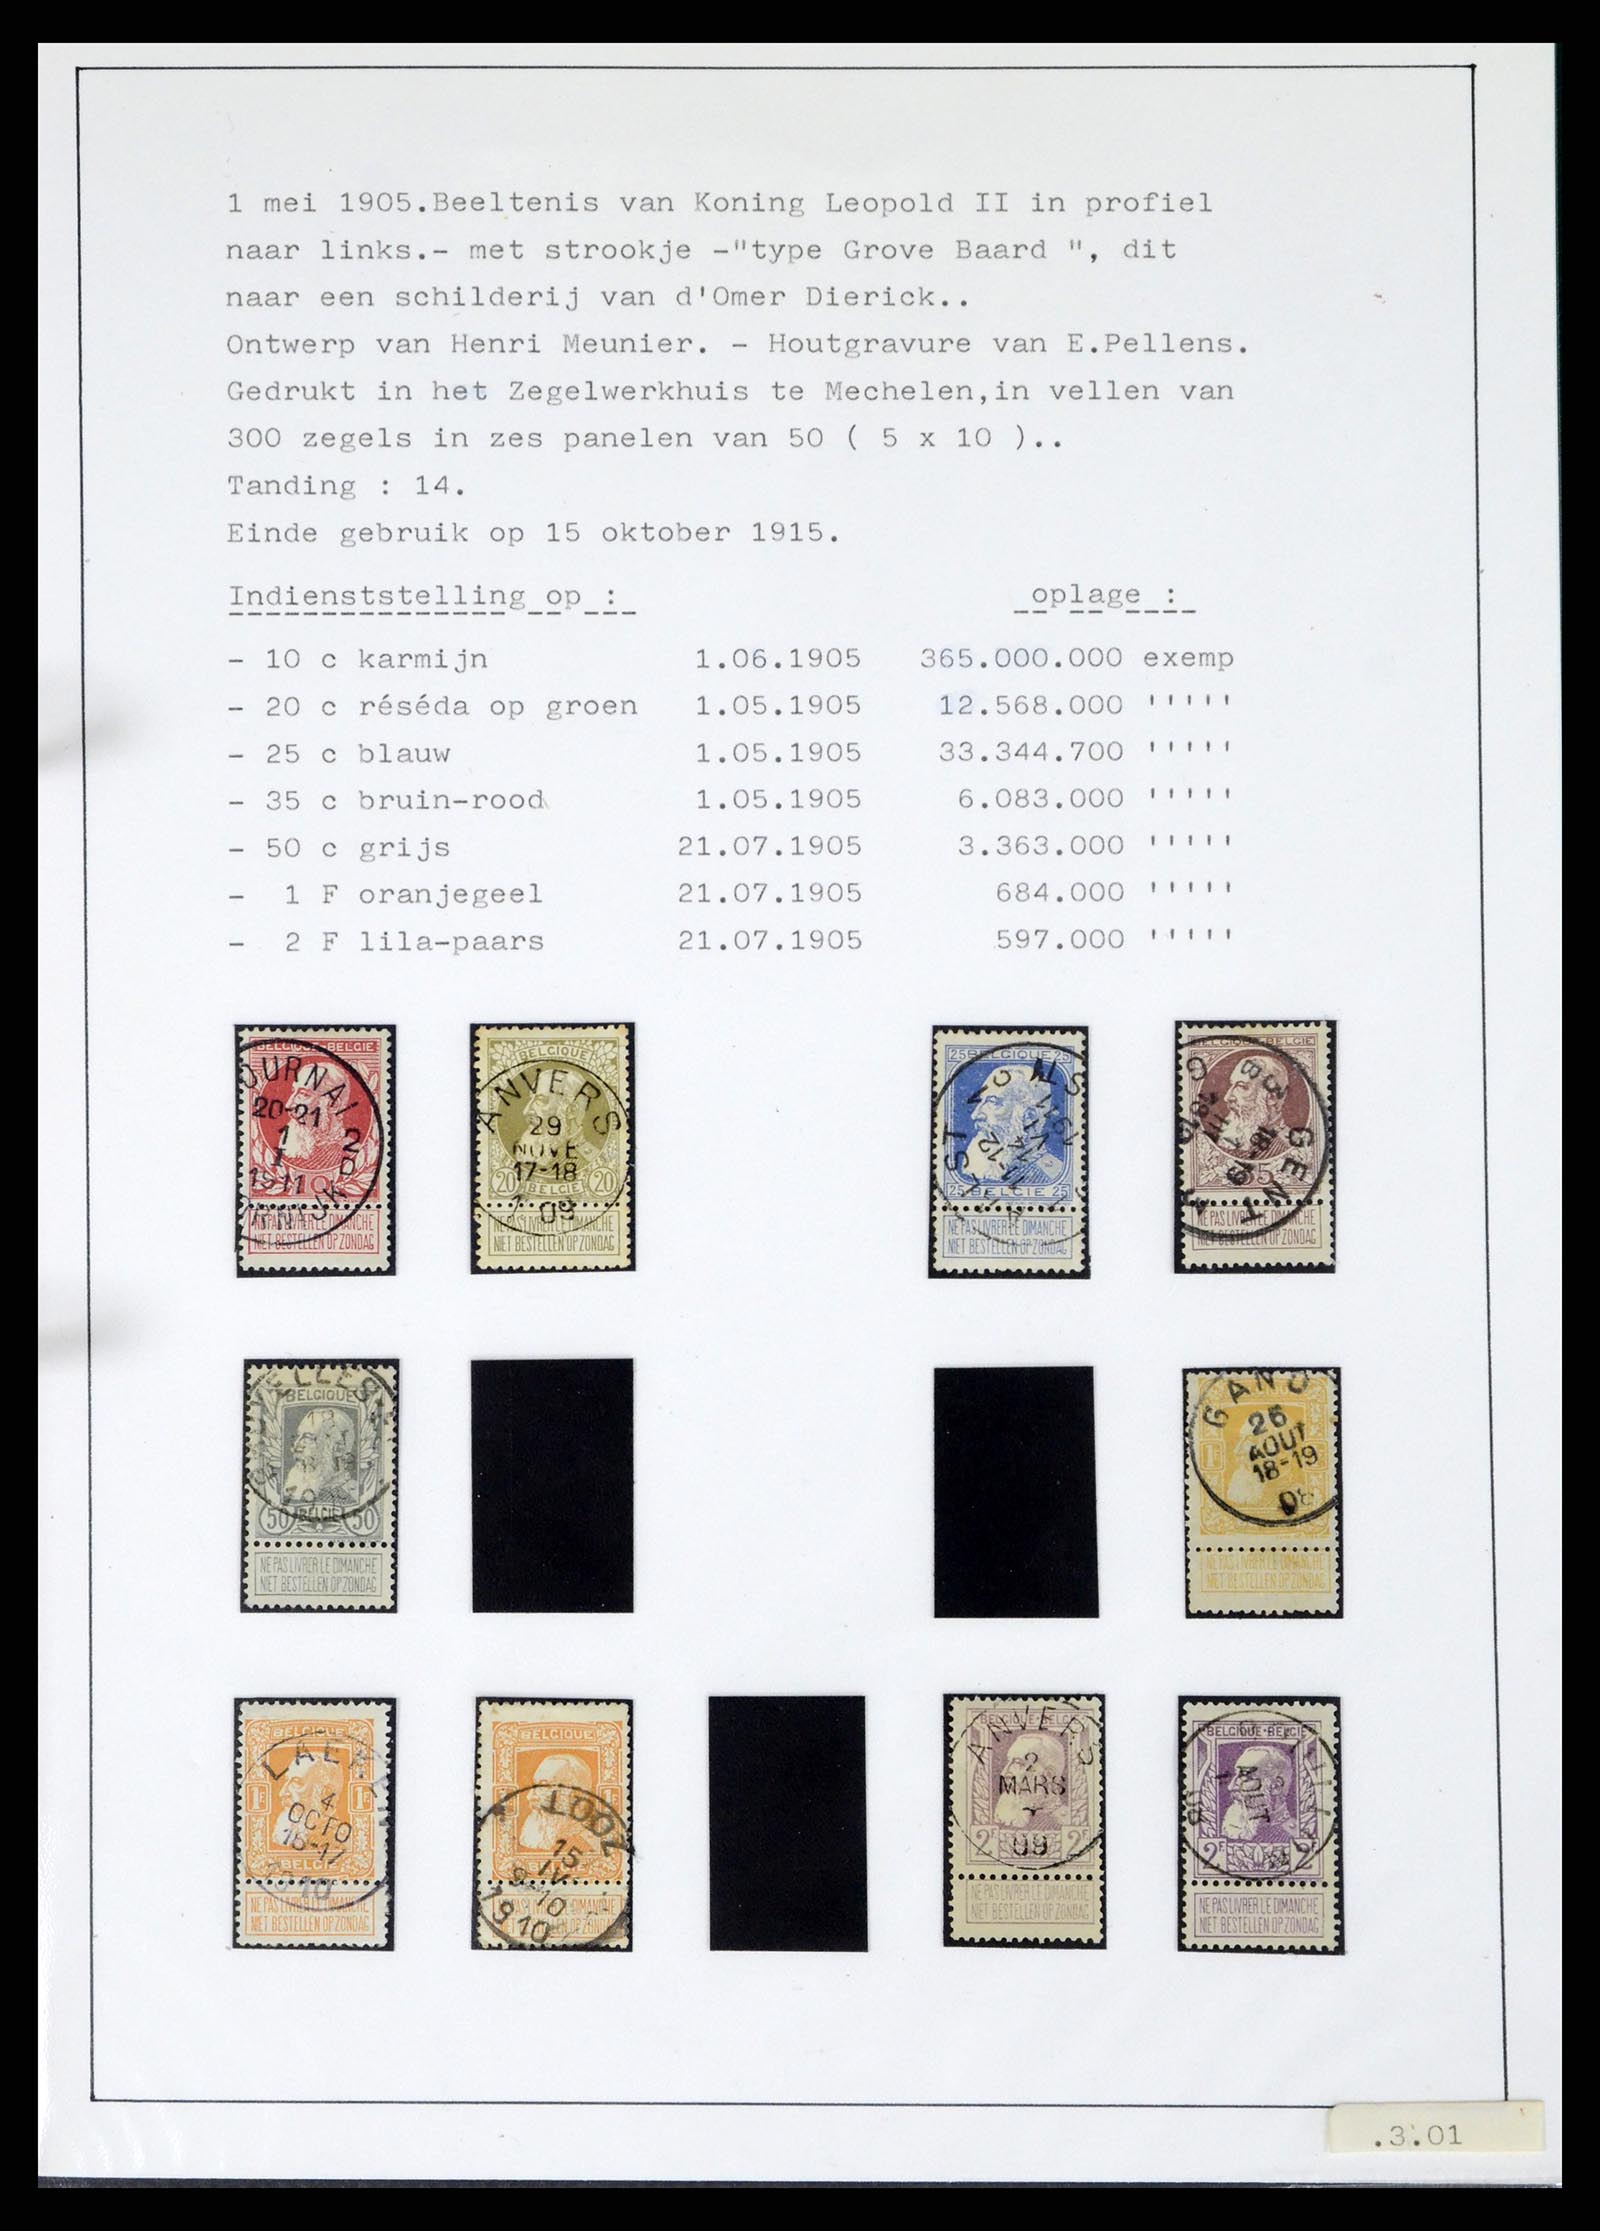 38033 0029 - Stamp collection 38033 Belgiùm classic 1849-1905.